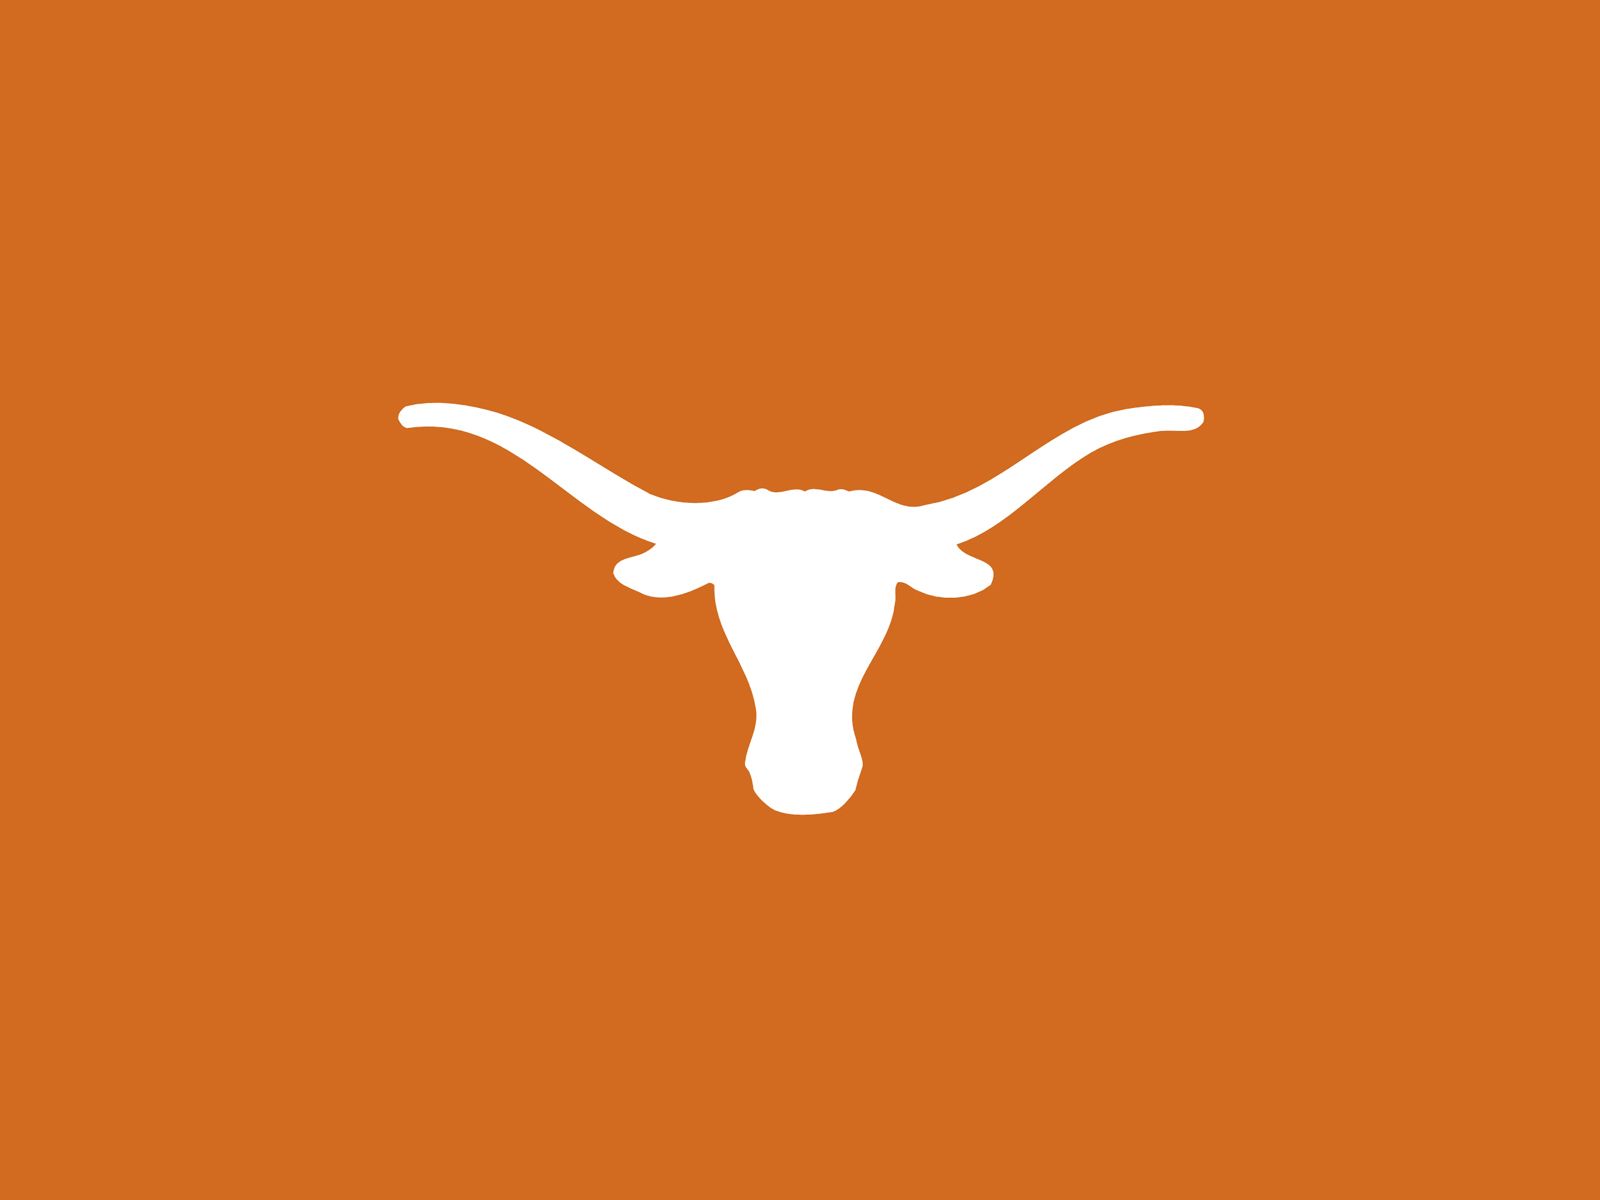 Texas Longhorns Logo Wallpaper